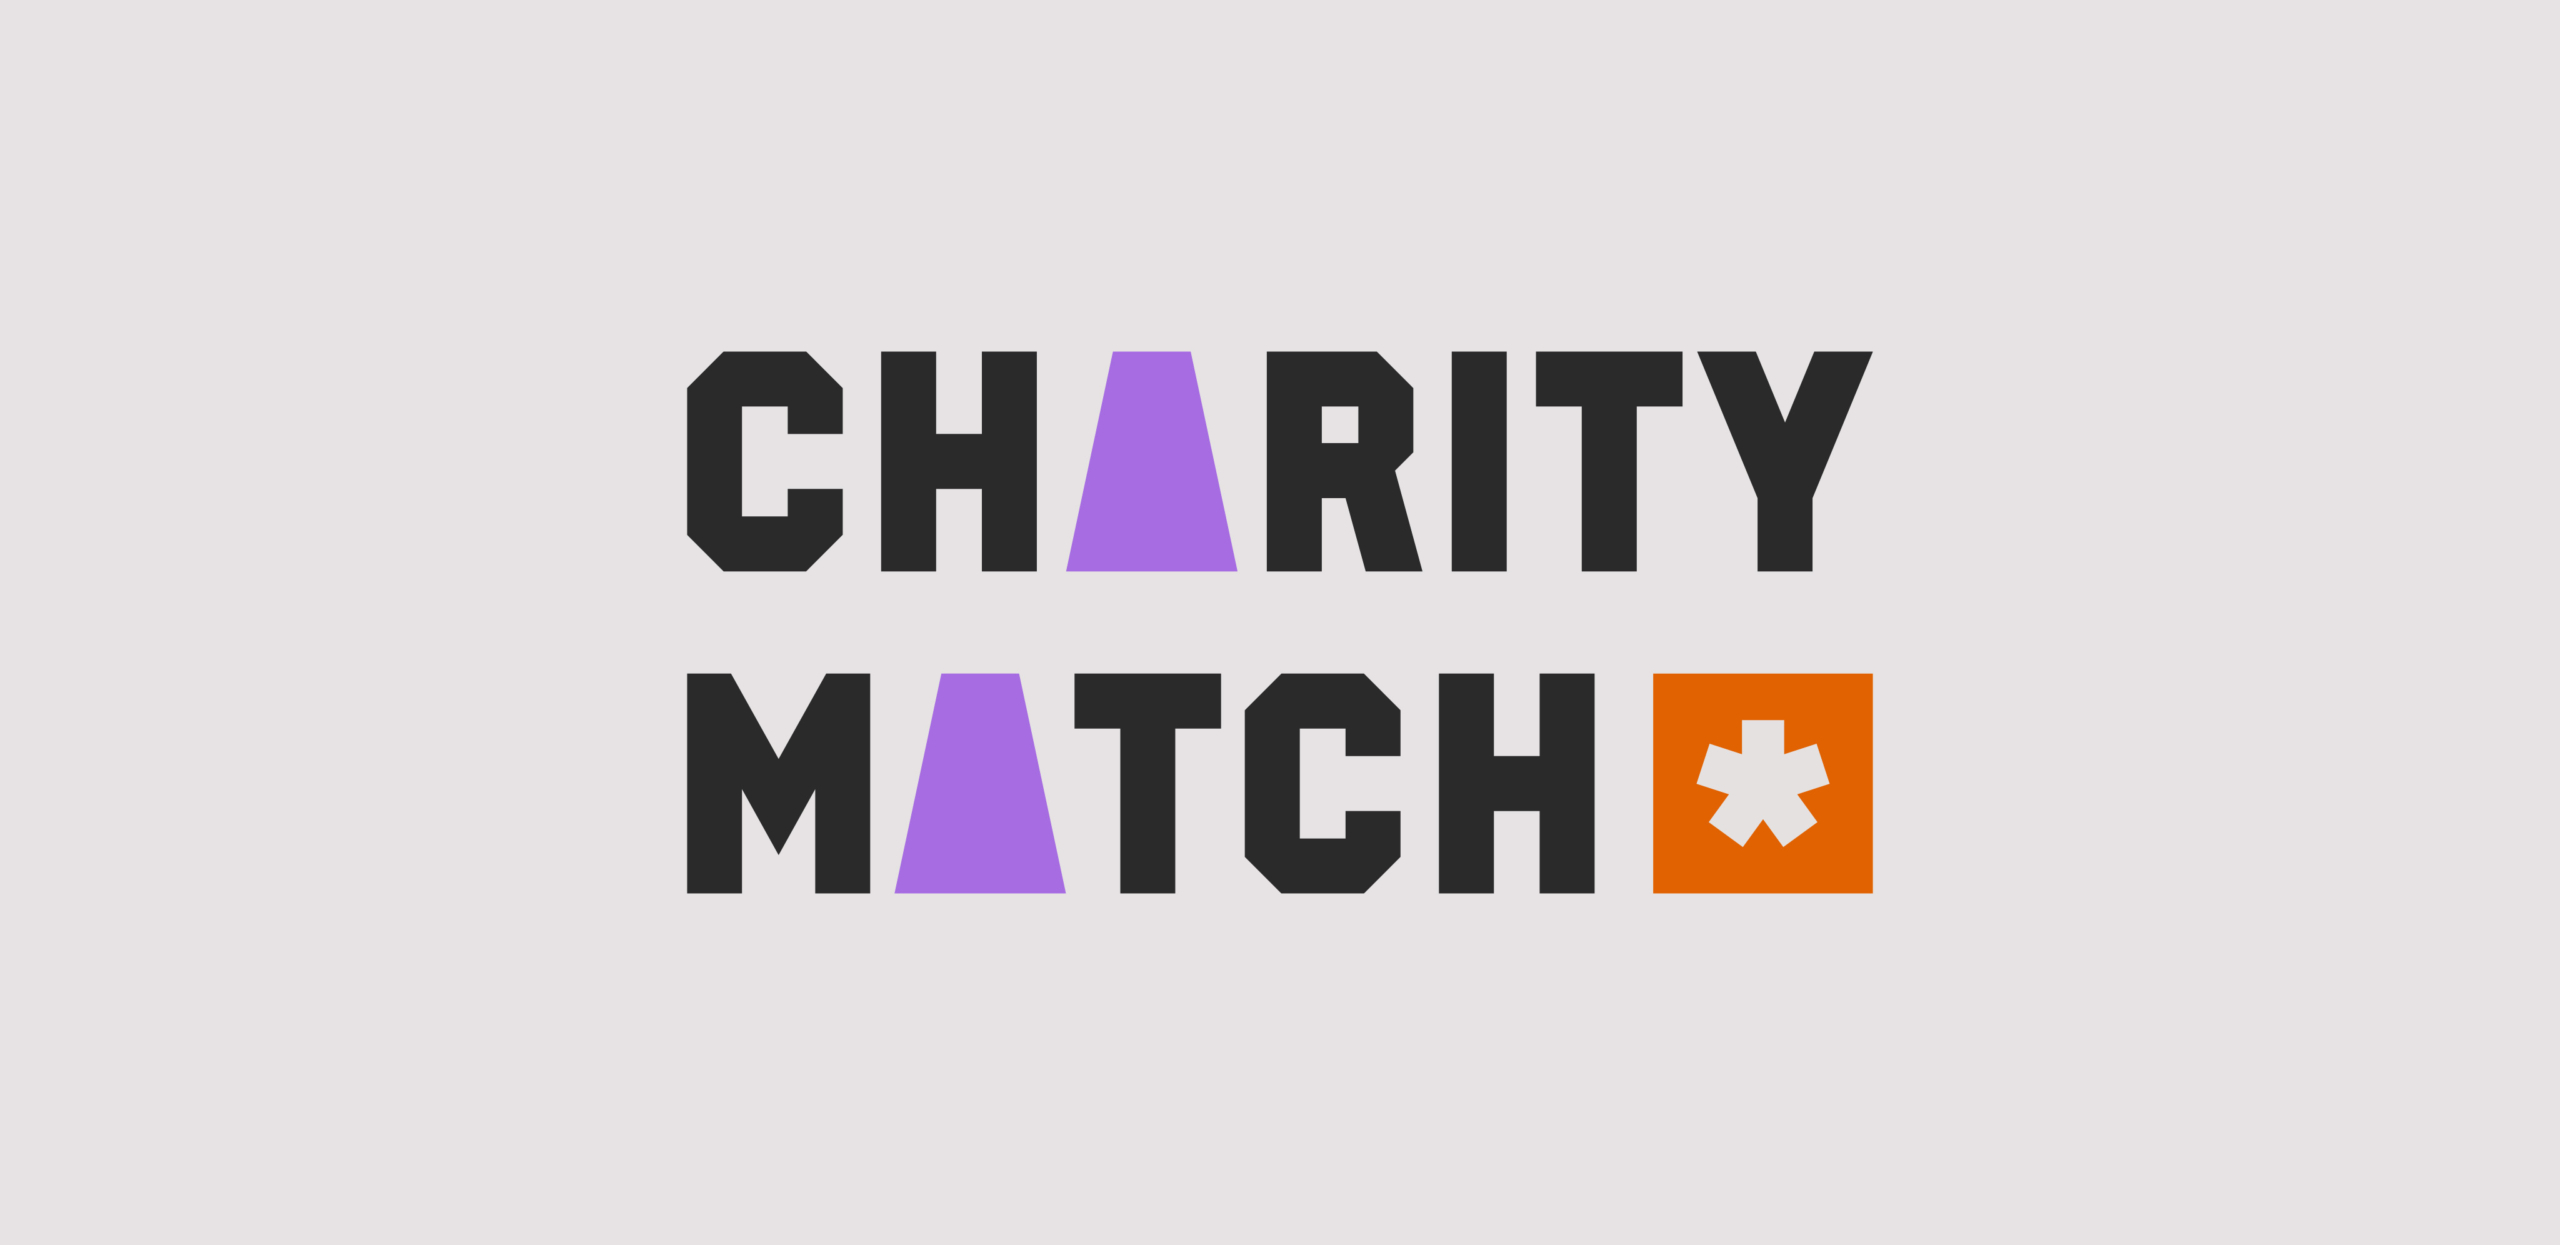 😇 Charity Match — navčaľna programa dlja blagodijnykiv